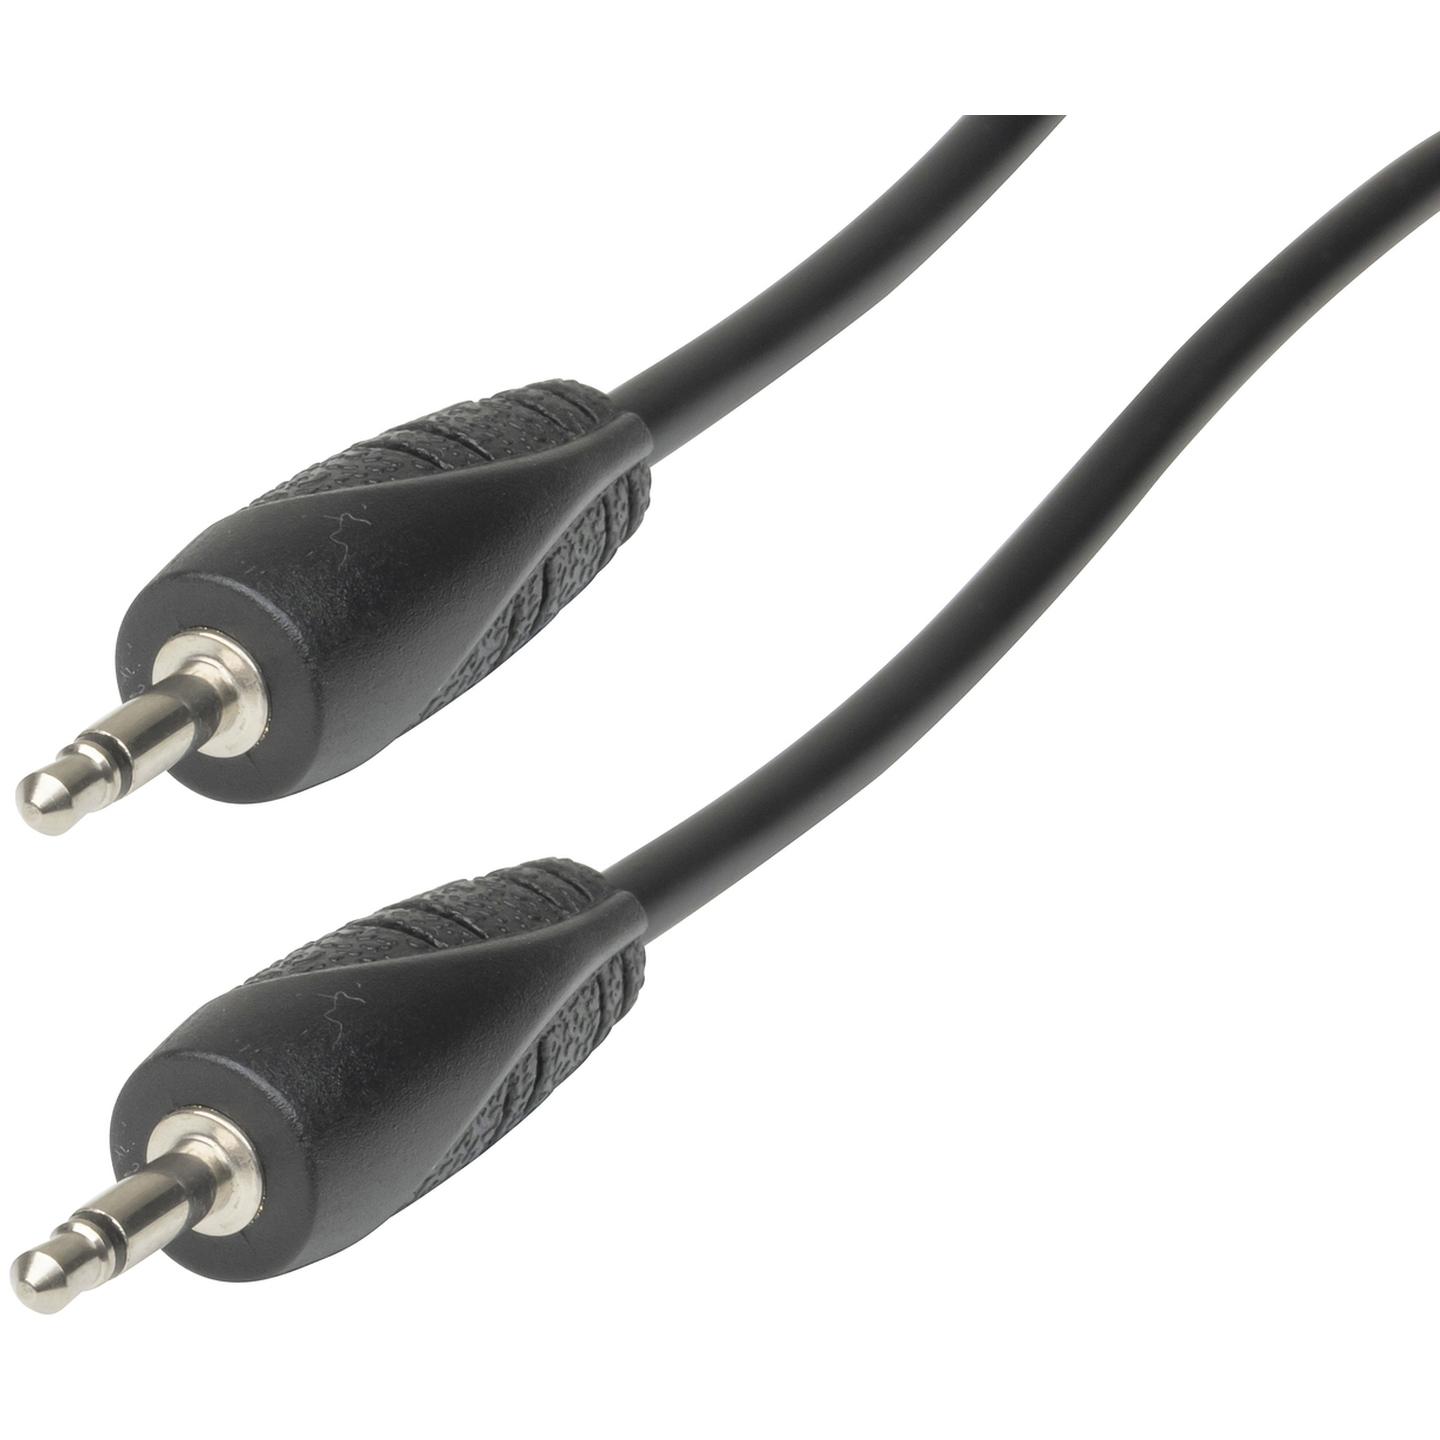 Audio Cable 3.5mm Mono Plug to 3.5mm Mono Plug - 1.5m